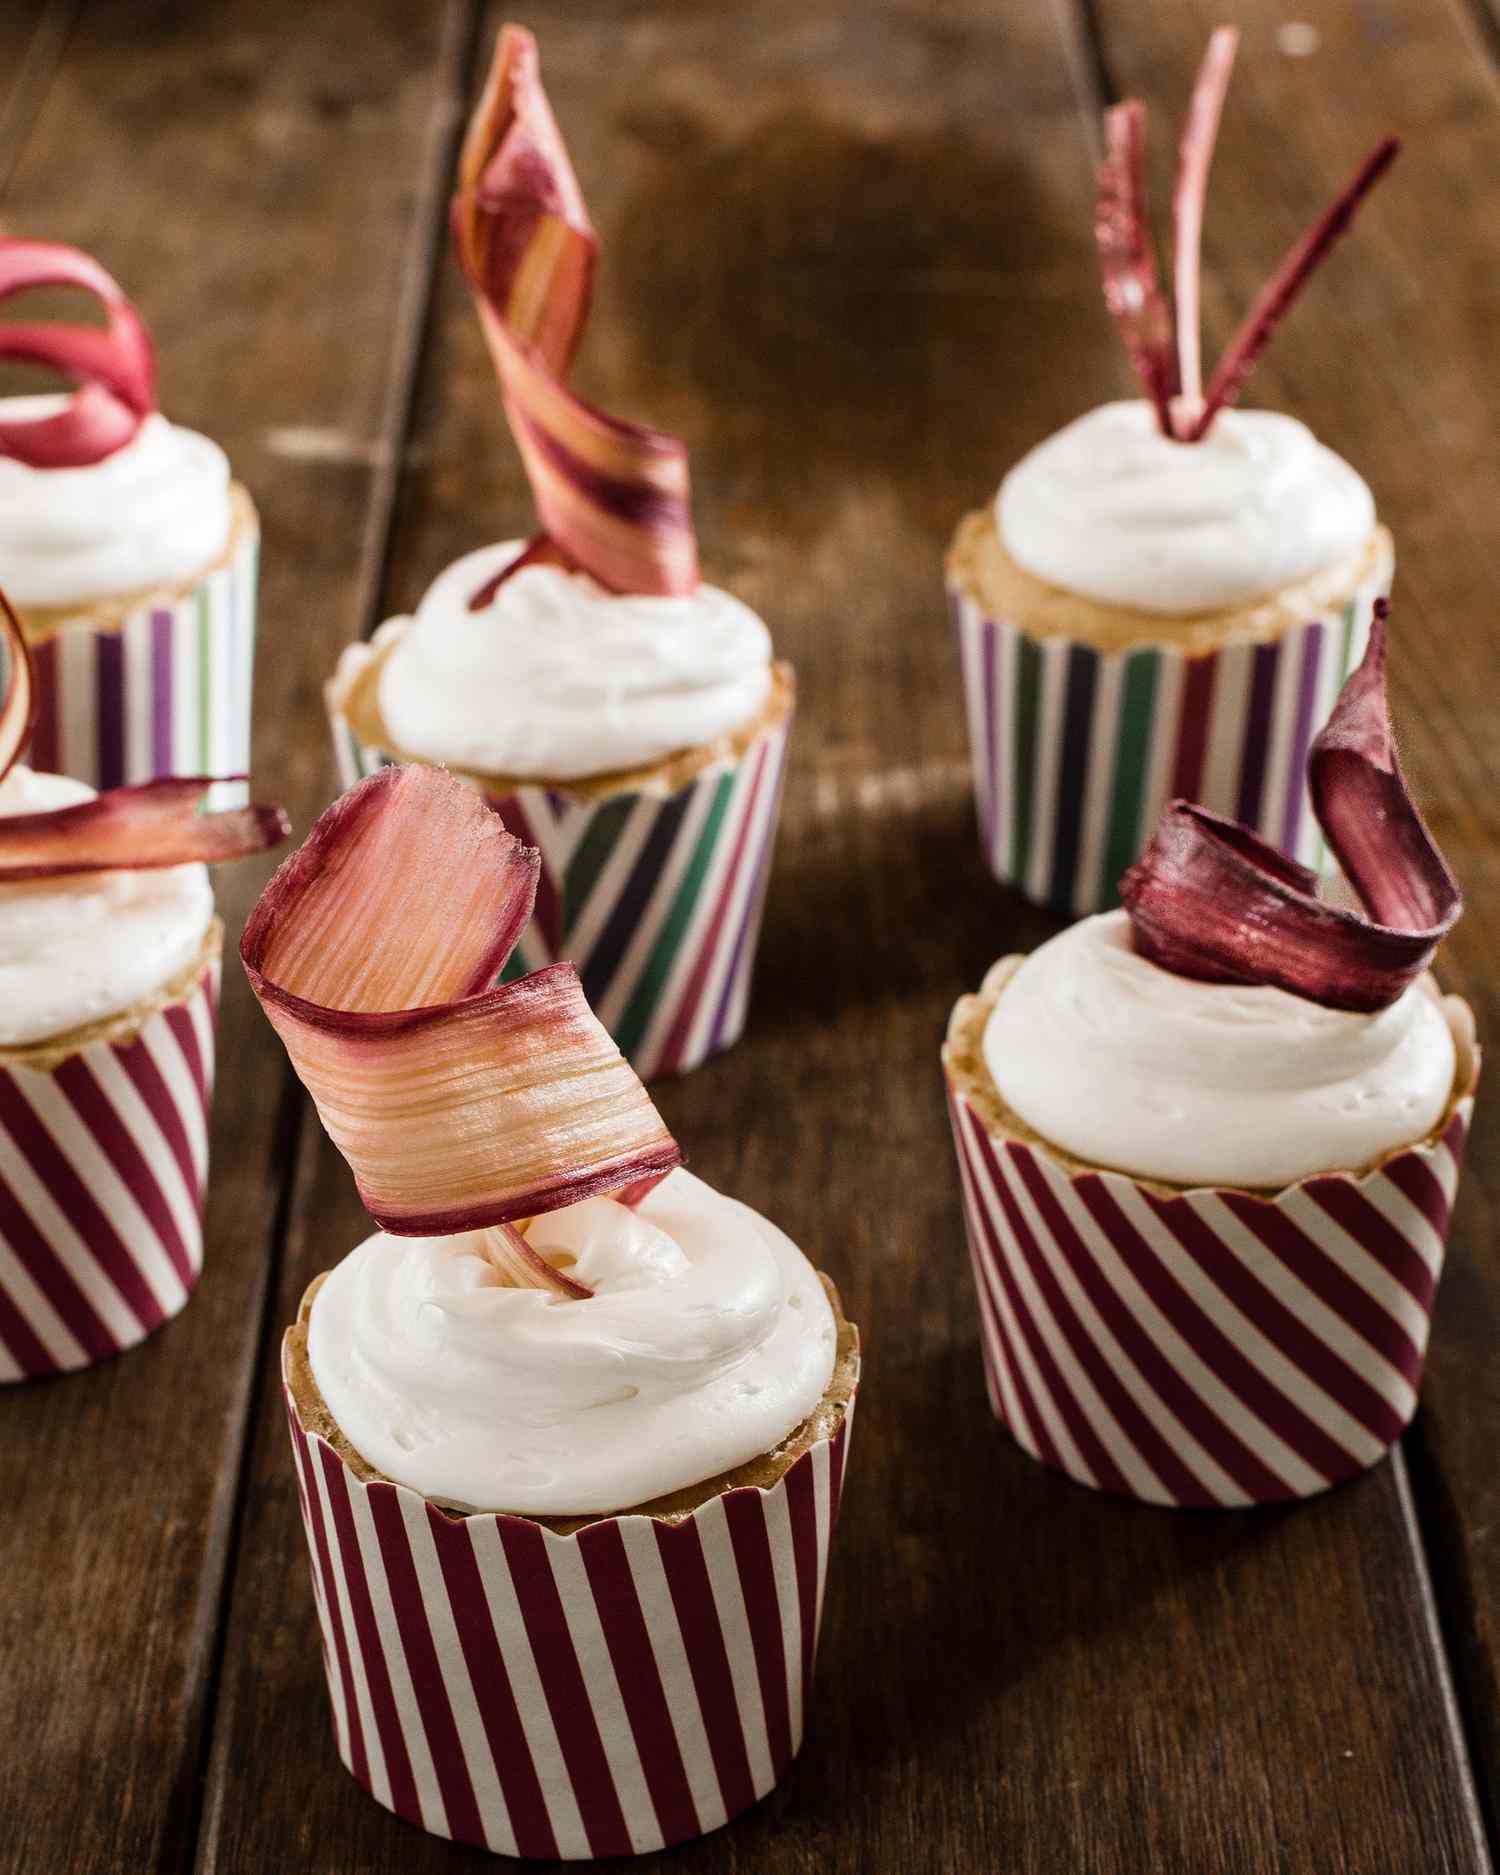 Rhubarb tuiles on cupcakes